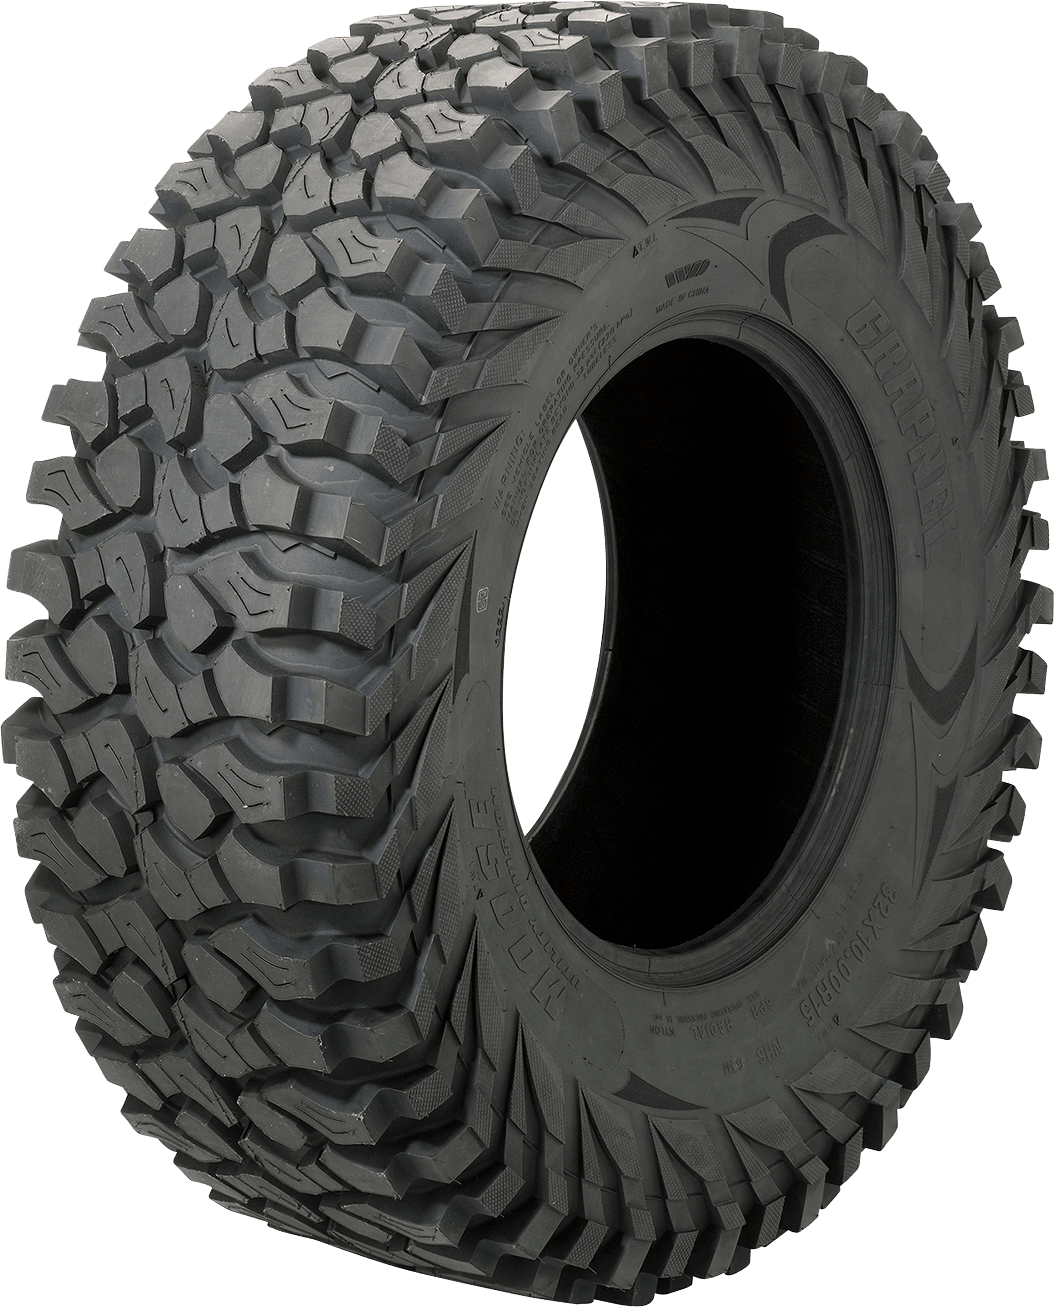 MOOSE UTILITY Tire - Grapnel - Front/Rear - 35x10R15 - 8 Ply WVSWL31351015R8